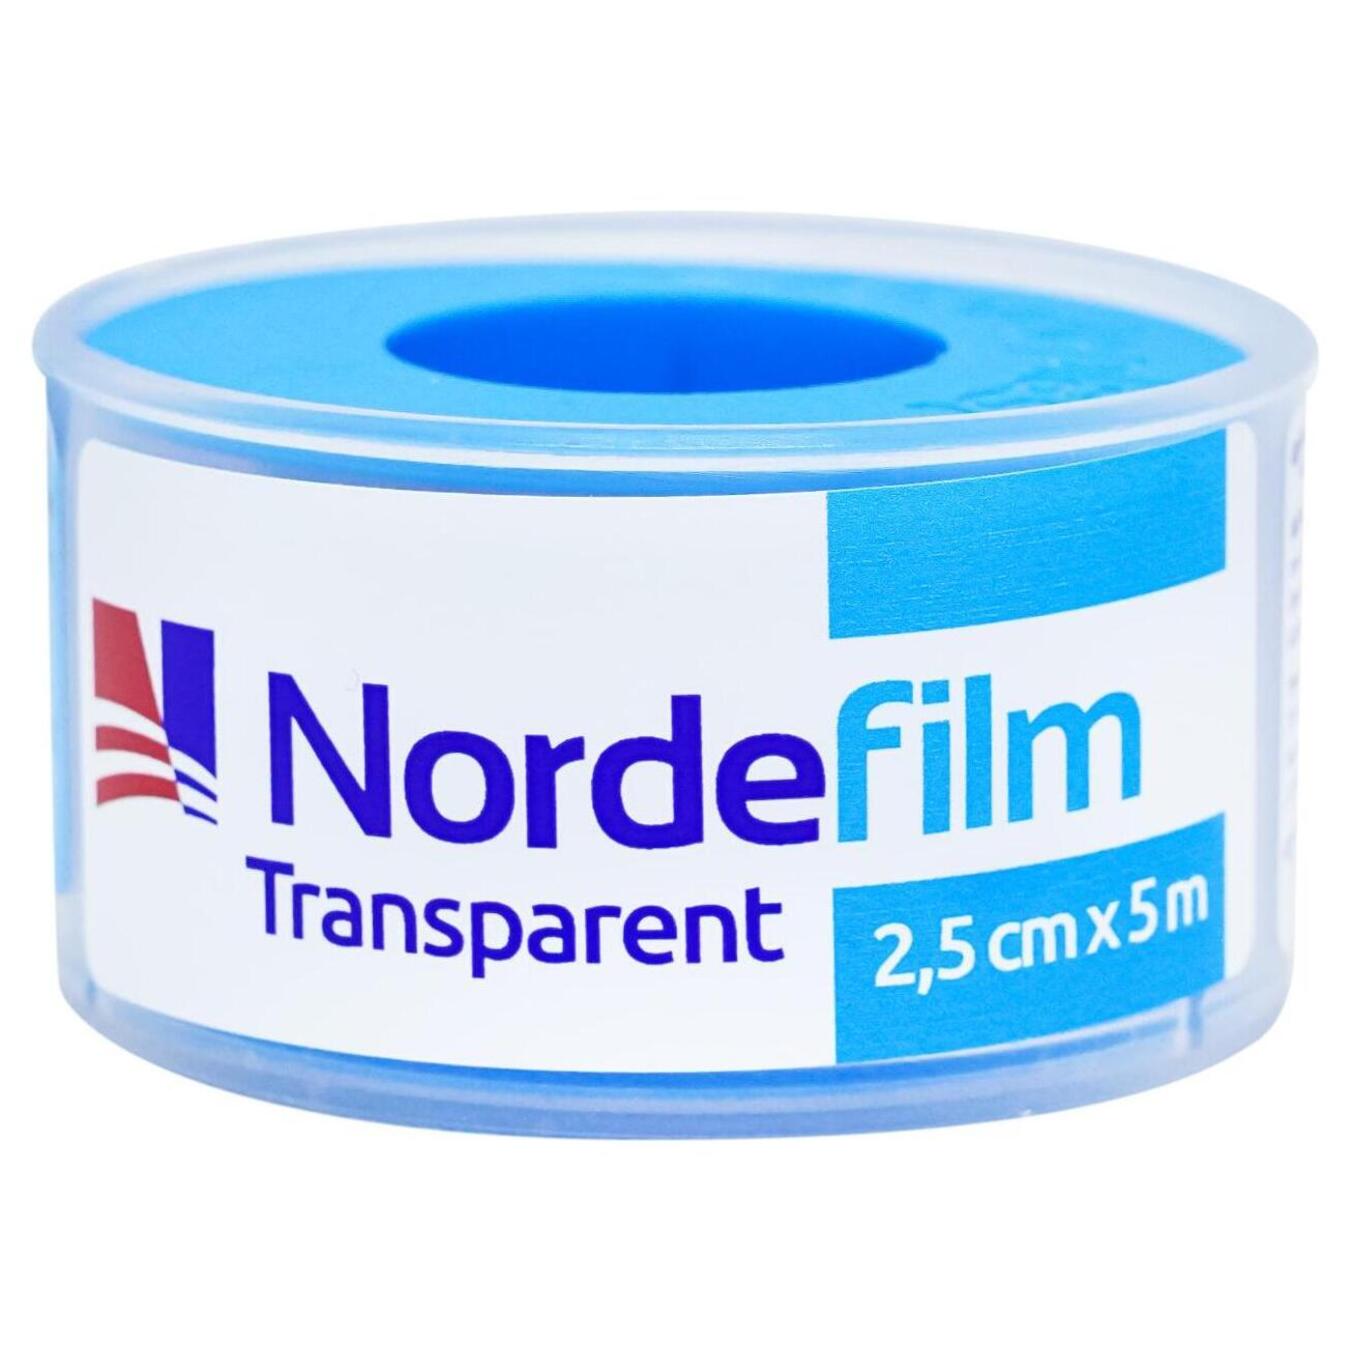 Plaster medical Nordeplast polymer waterproof 2.5cm*5m plastic